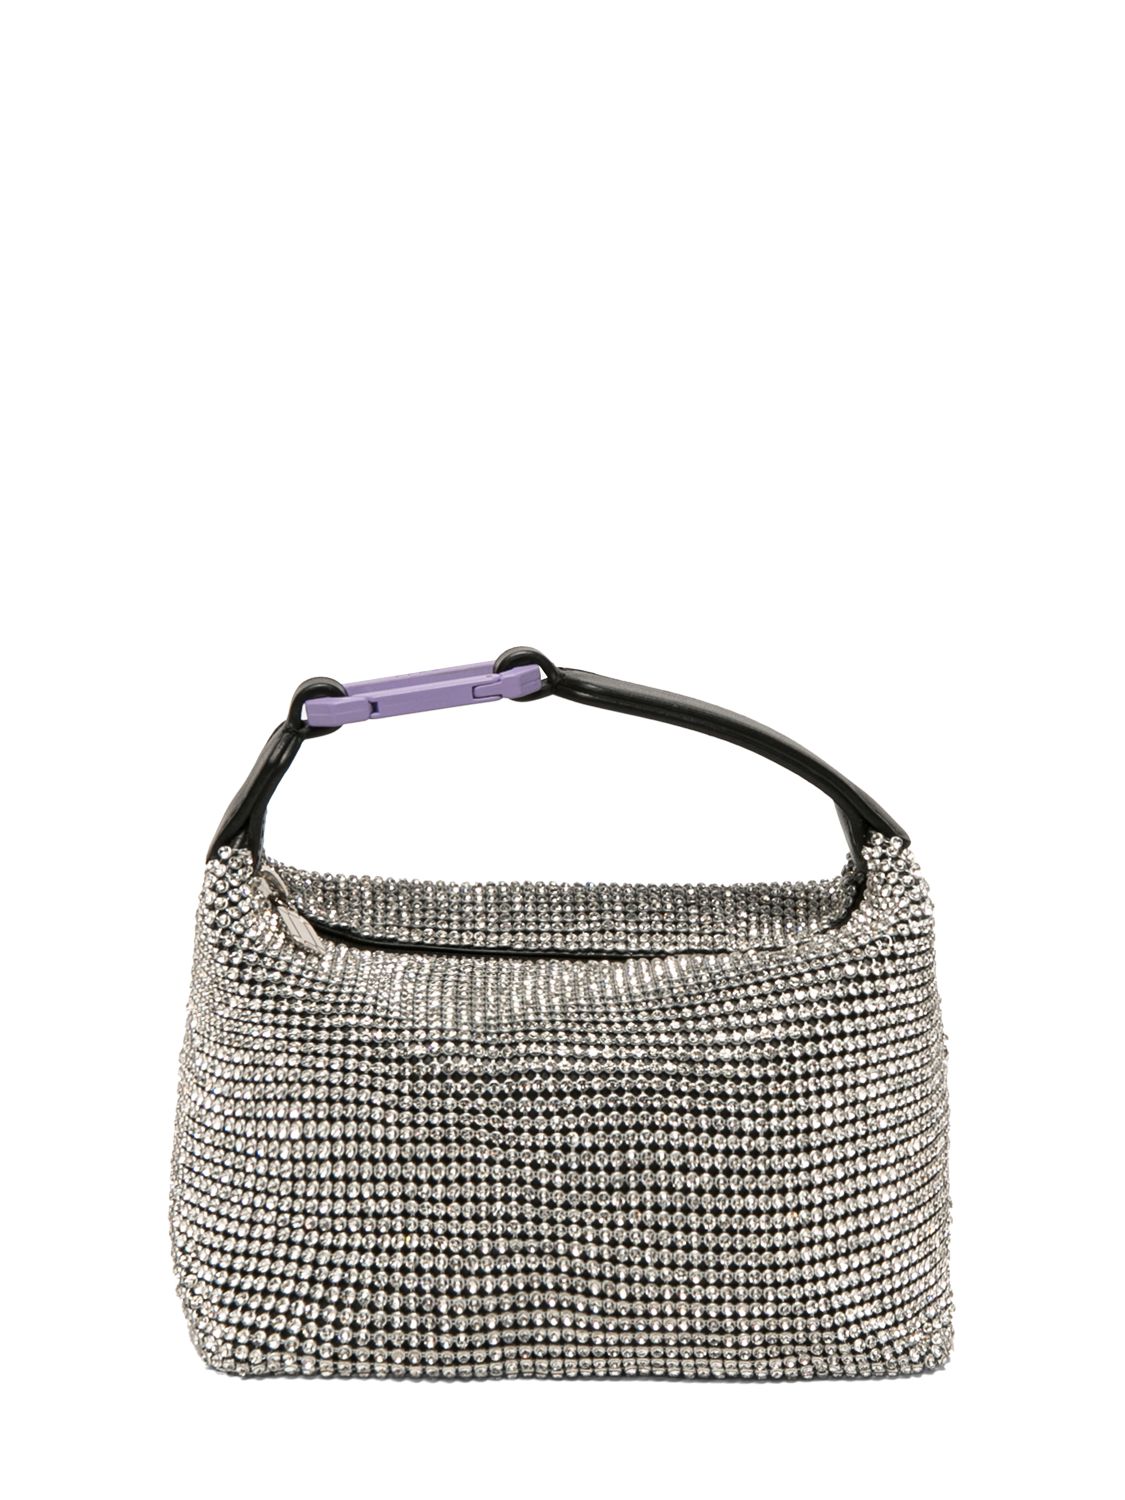 Moon Leather & Crystal Top Handle Bag